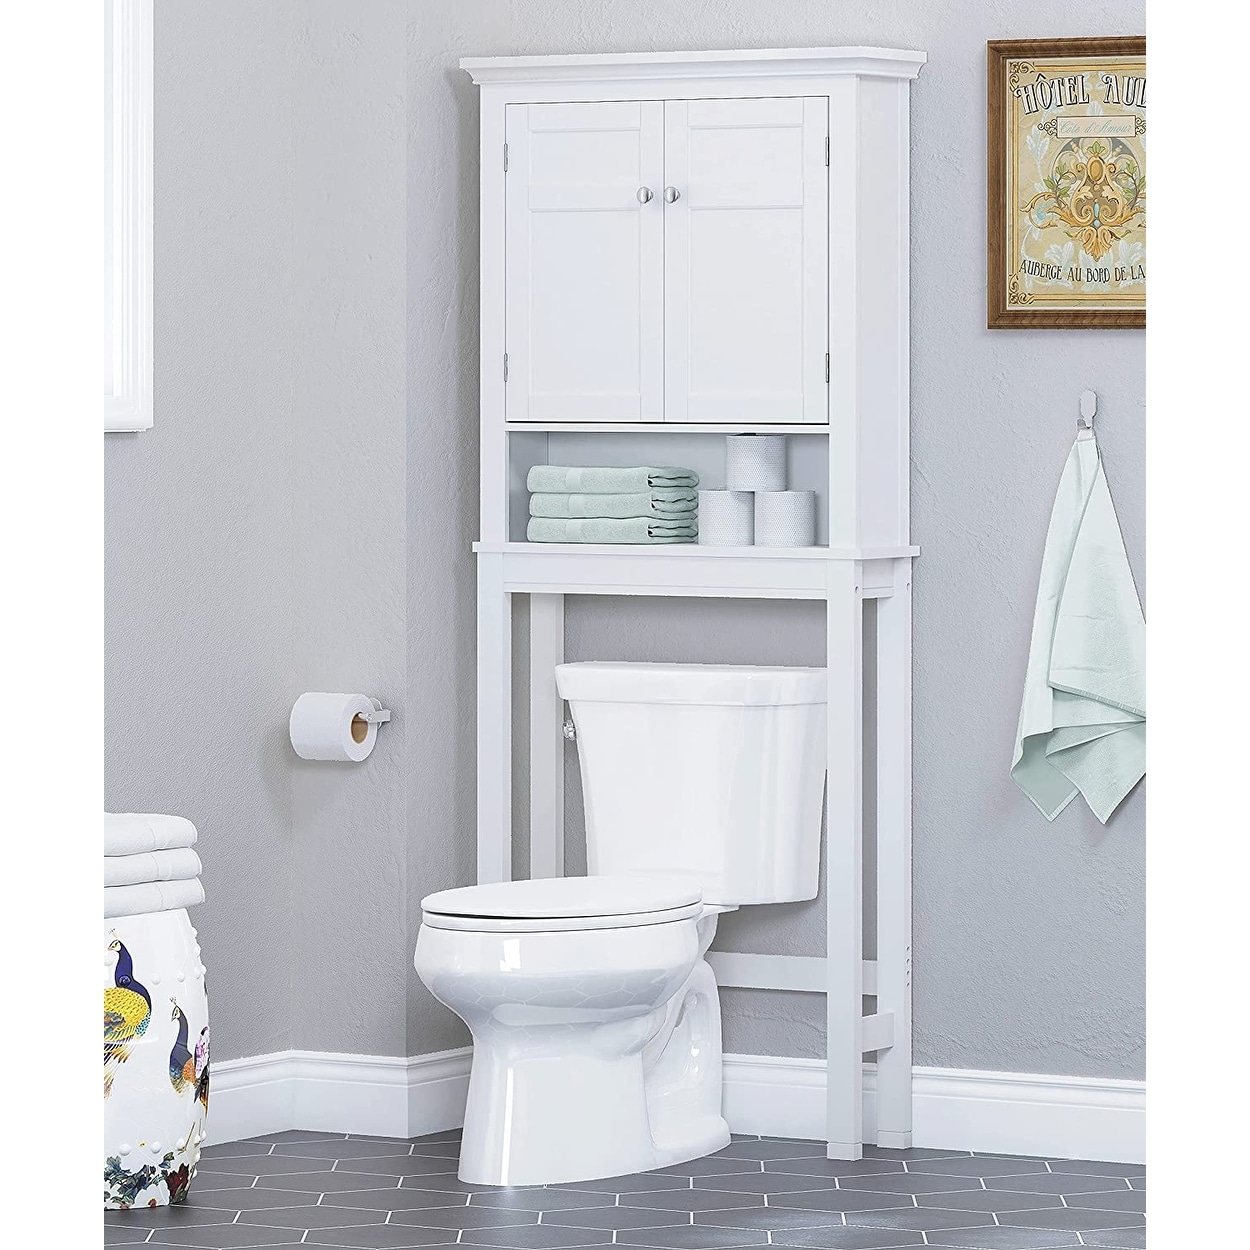 https://ak1.ostkcdn.com/images/products/is/images/direct/80a3c99eb3a066c8ed25d9fba1ad841abe4c3ff4/Spirich-Home-Bathroom-Shelf-Over-The-Toilet%2C-Bathroom-SpaceSaver%2C-Bathroom-Bathroom-Storage-Cabinet-Organizer%2C-White-with-Drawer.jpg